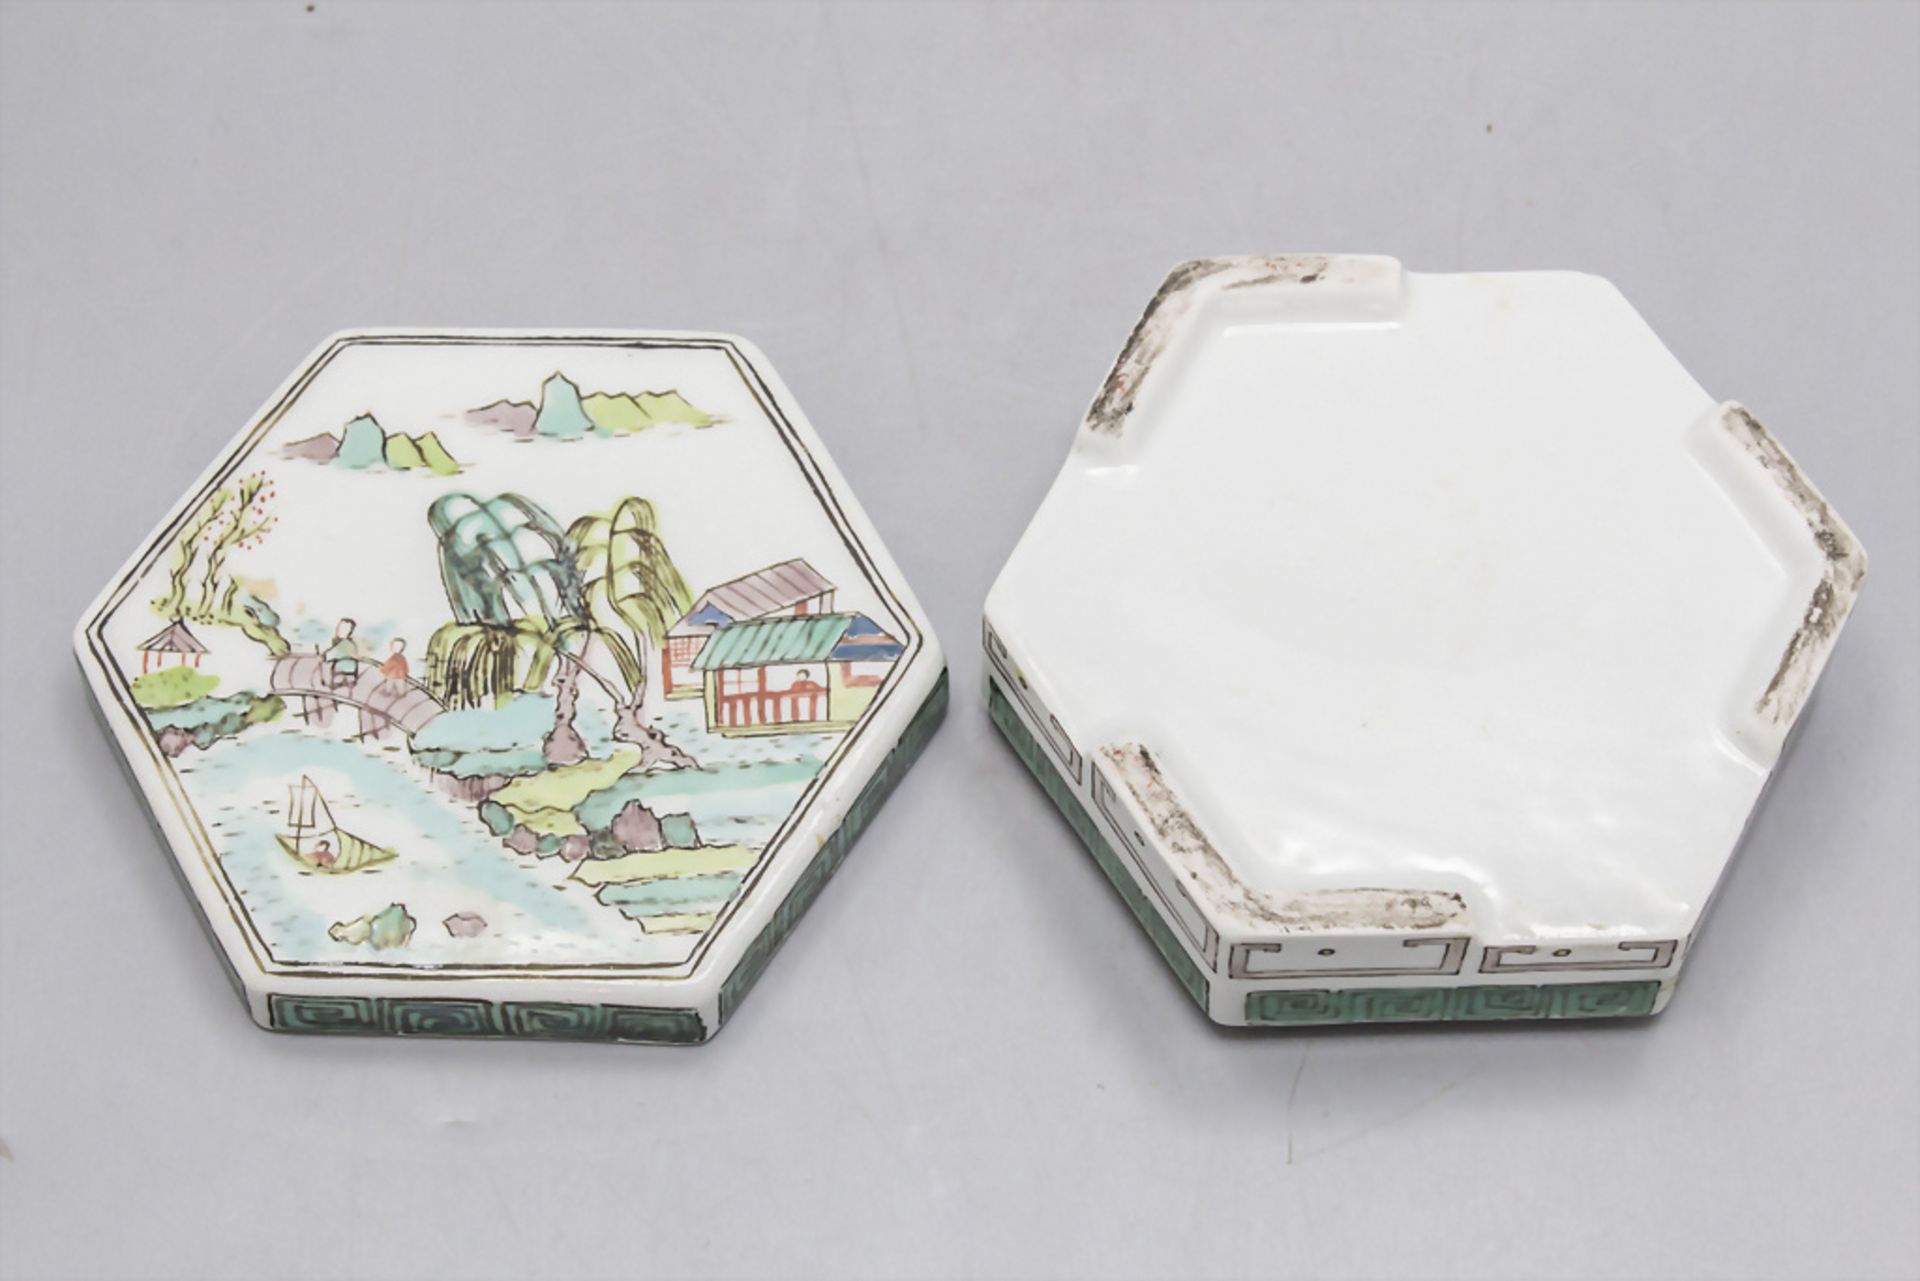 Deckeldose / A lidded porcelain box, China, Qing-Dynastie (1644-1911), 18./19. Jh. - Image 5 of 6